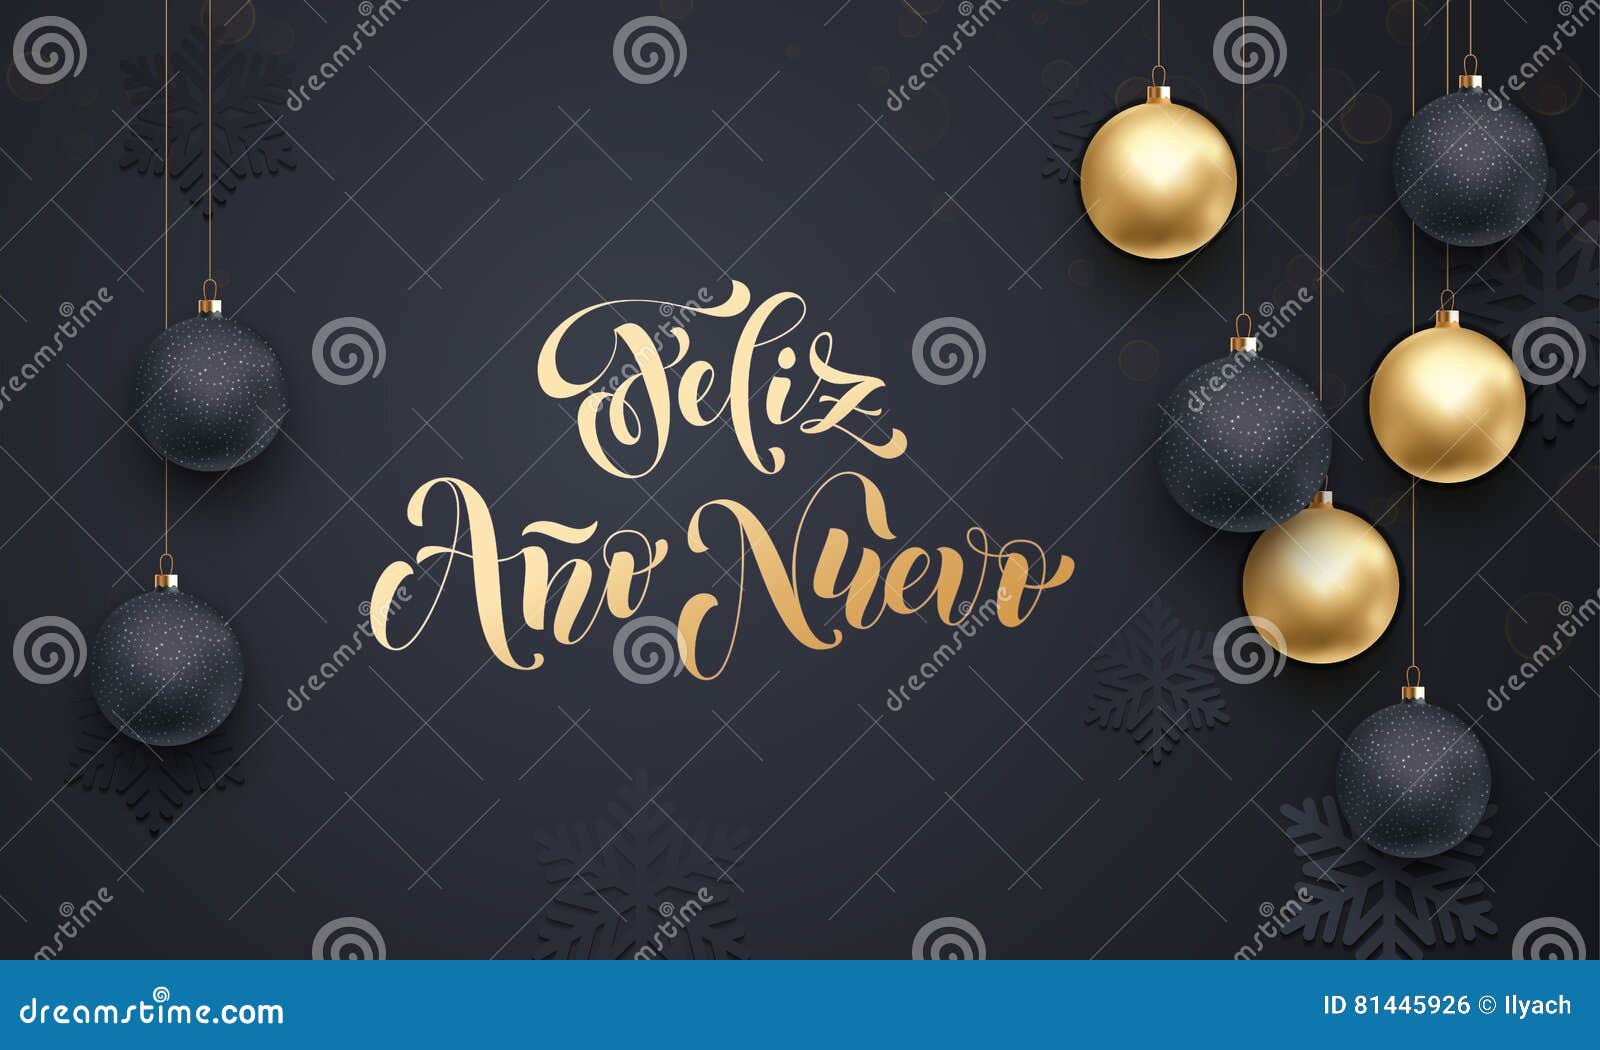 spanish new year feliz ano nuevo decoration golden ornament greeting